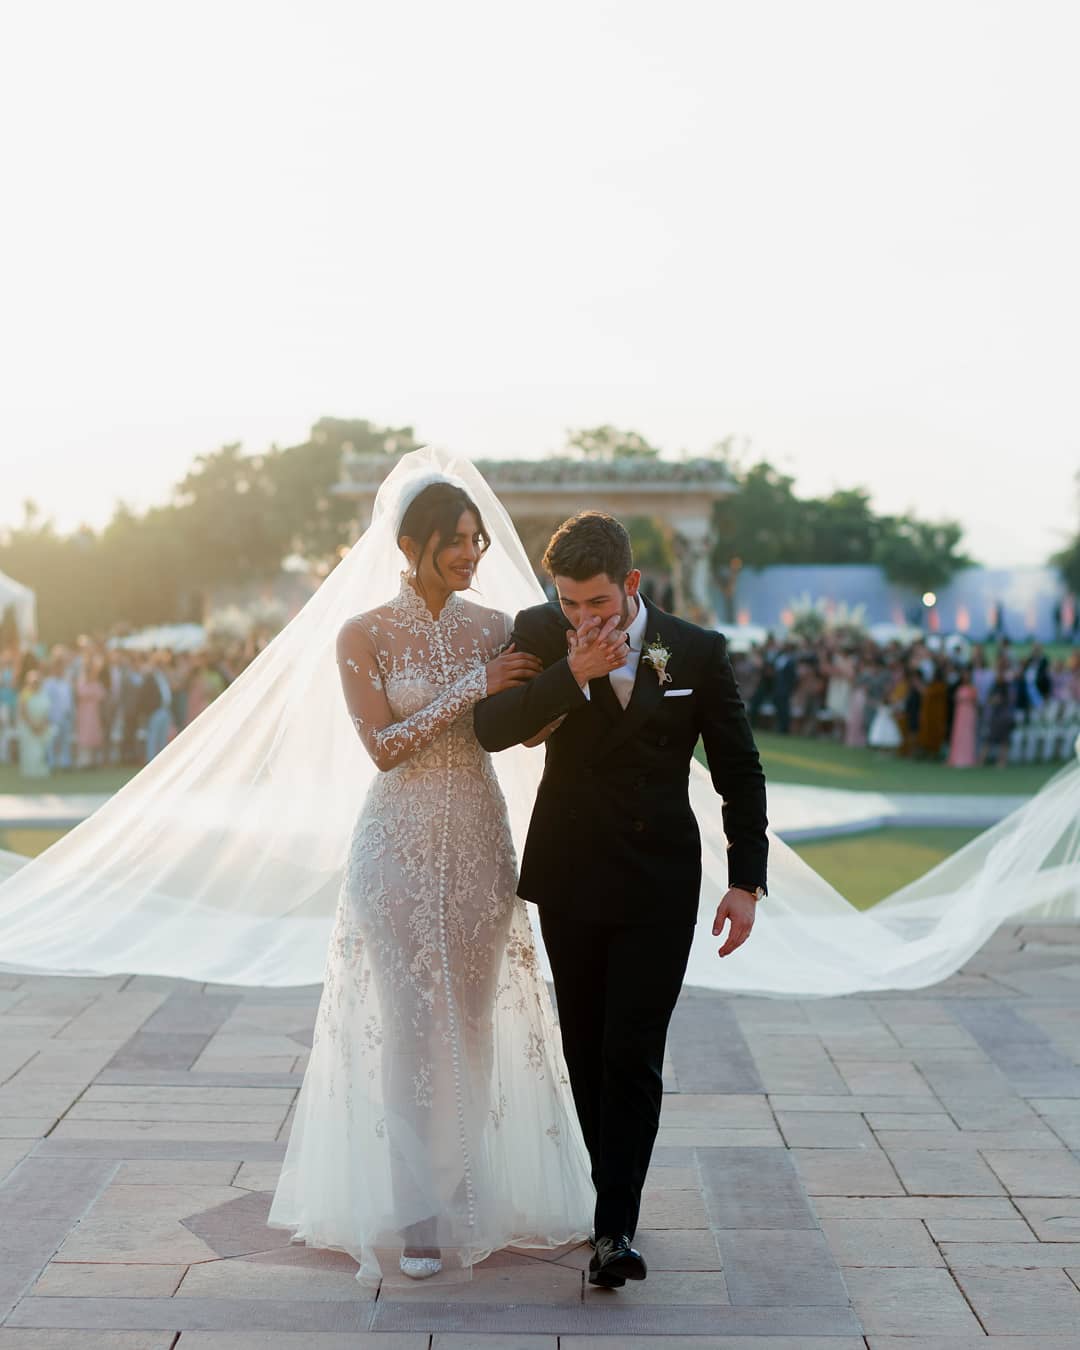 Priyanka Chopra and Nick Jonas share pictures from their gorgeous wedding